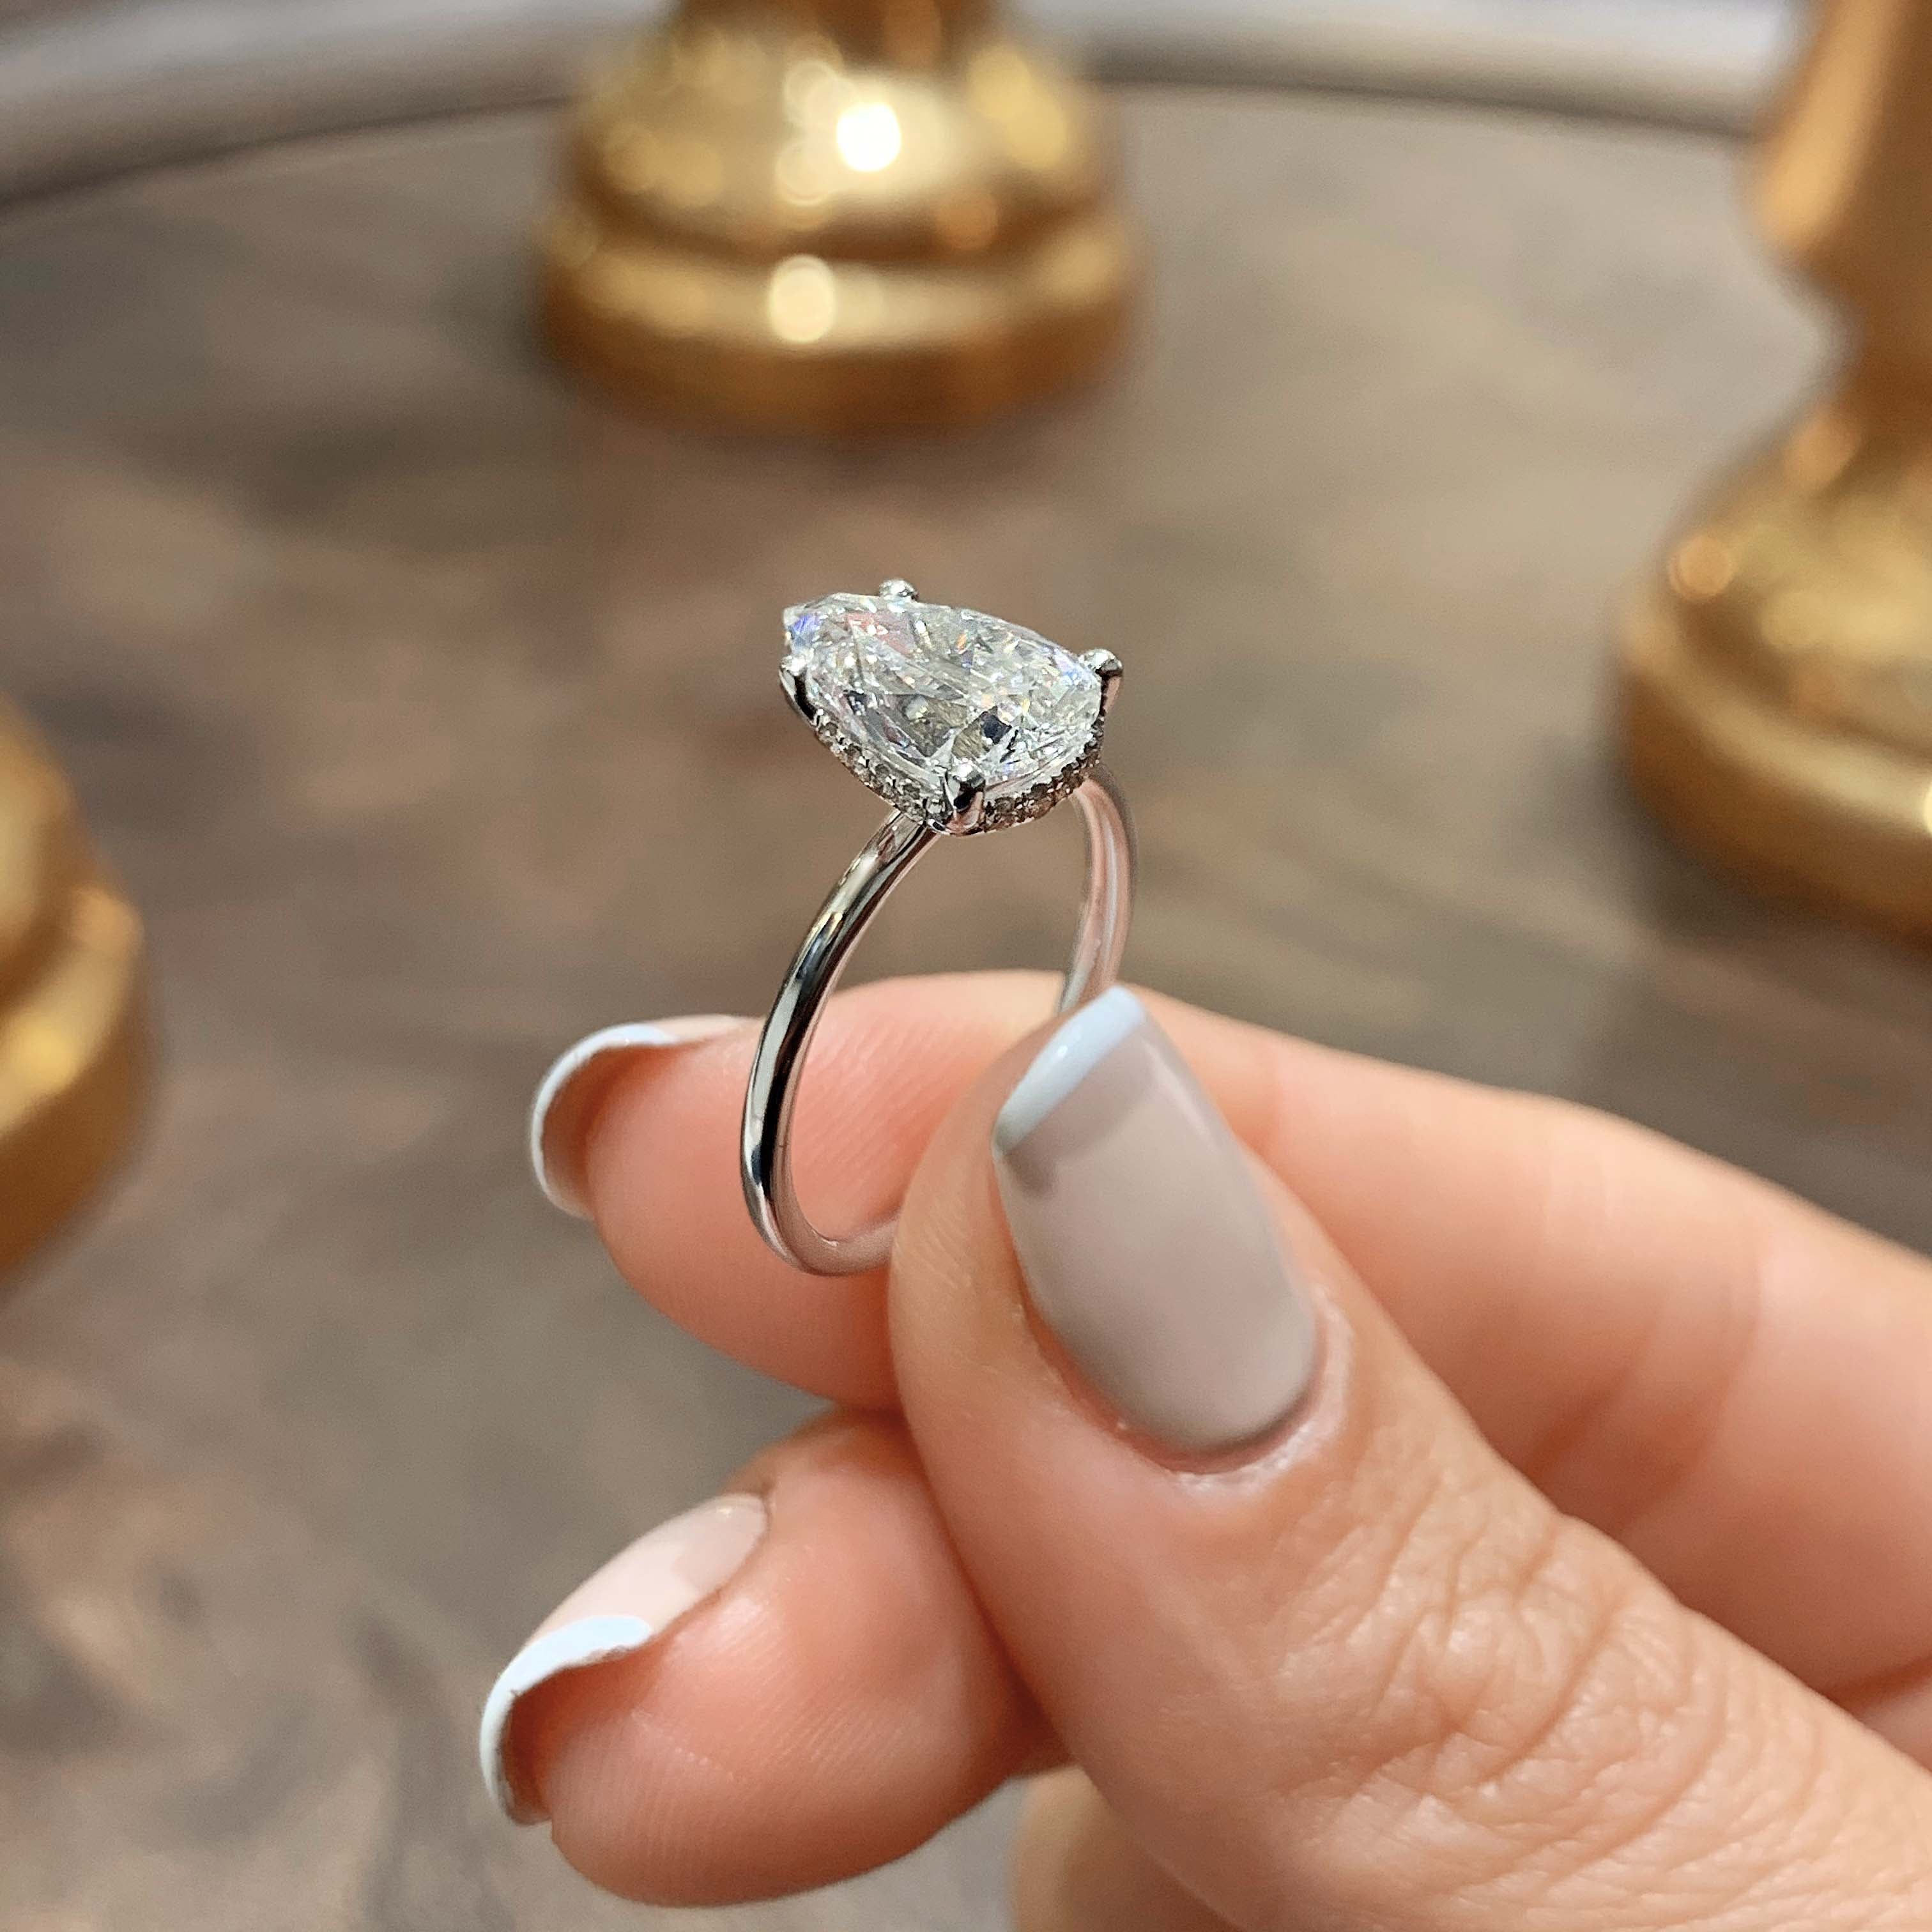 Willow Diamond Engagement Ring -18K White Gold